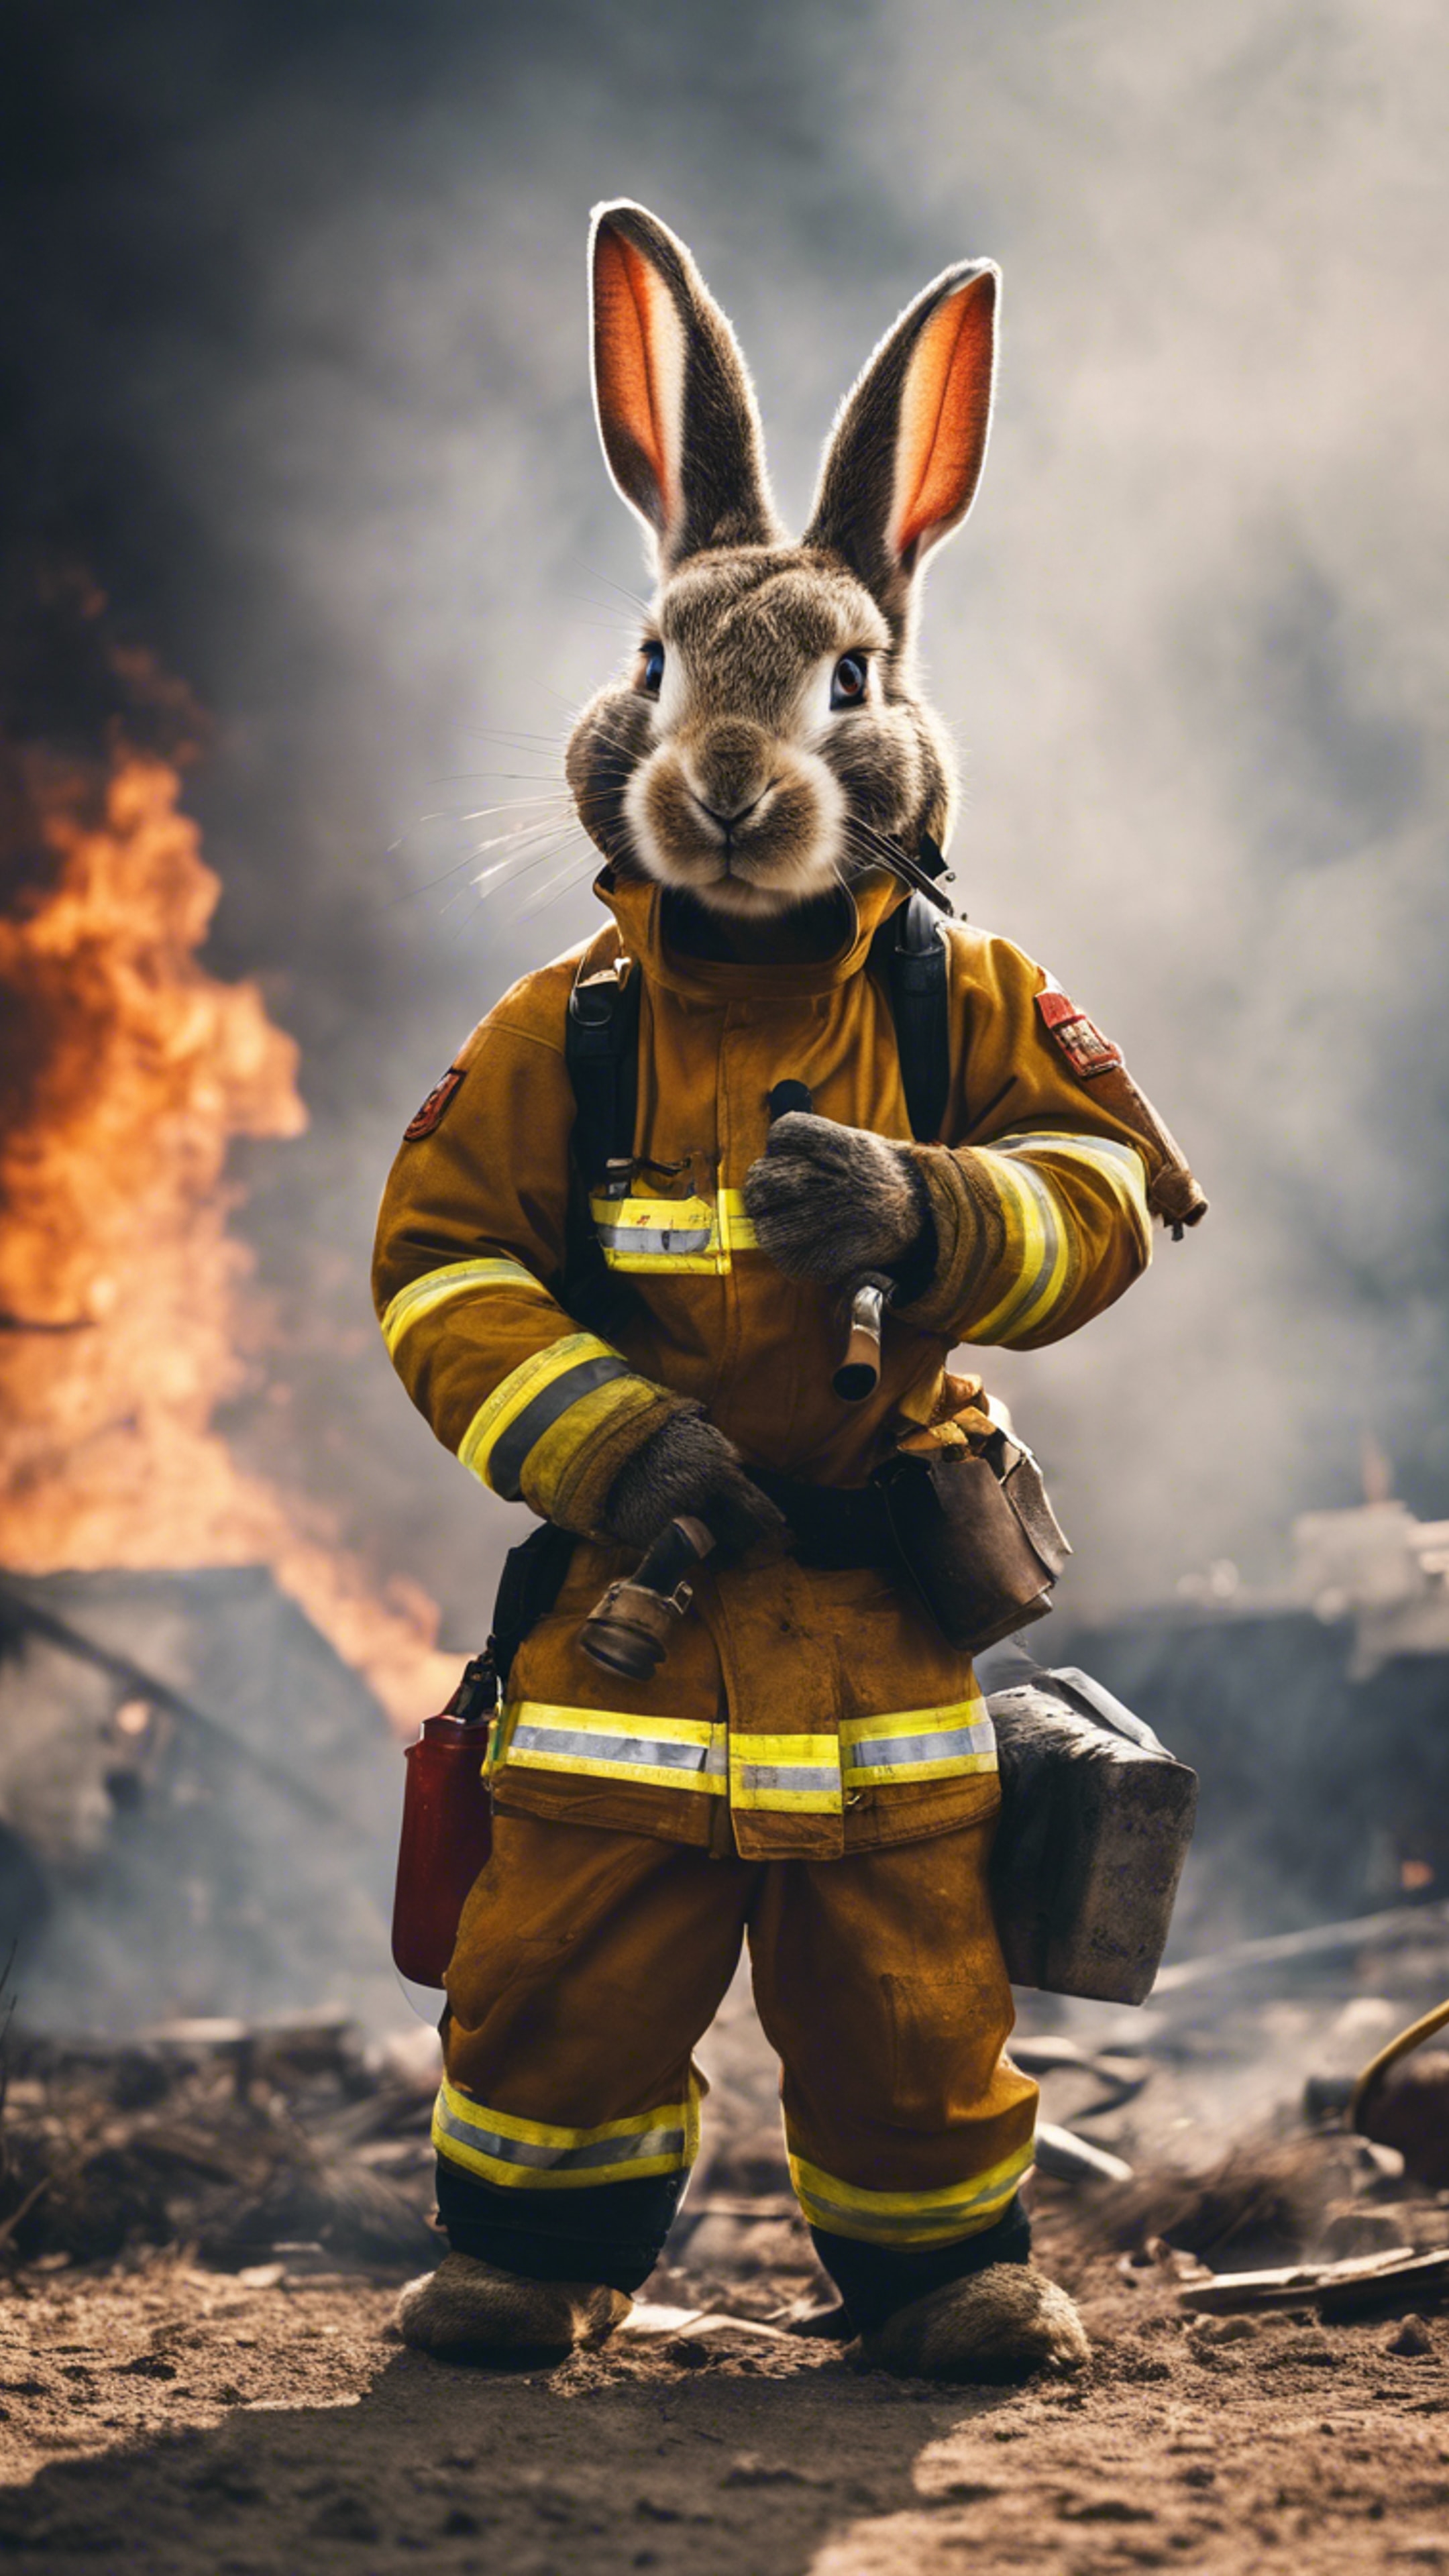 A rabbit firefighter bravely battling a blazing inferno.壁紙[2a84d9a3978549d9830c]